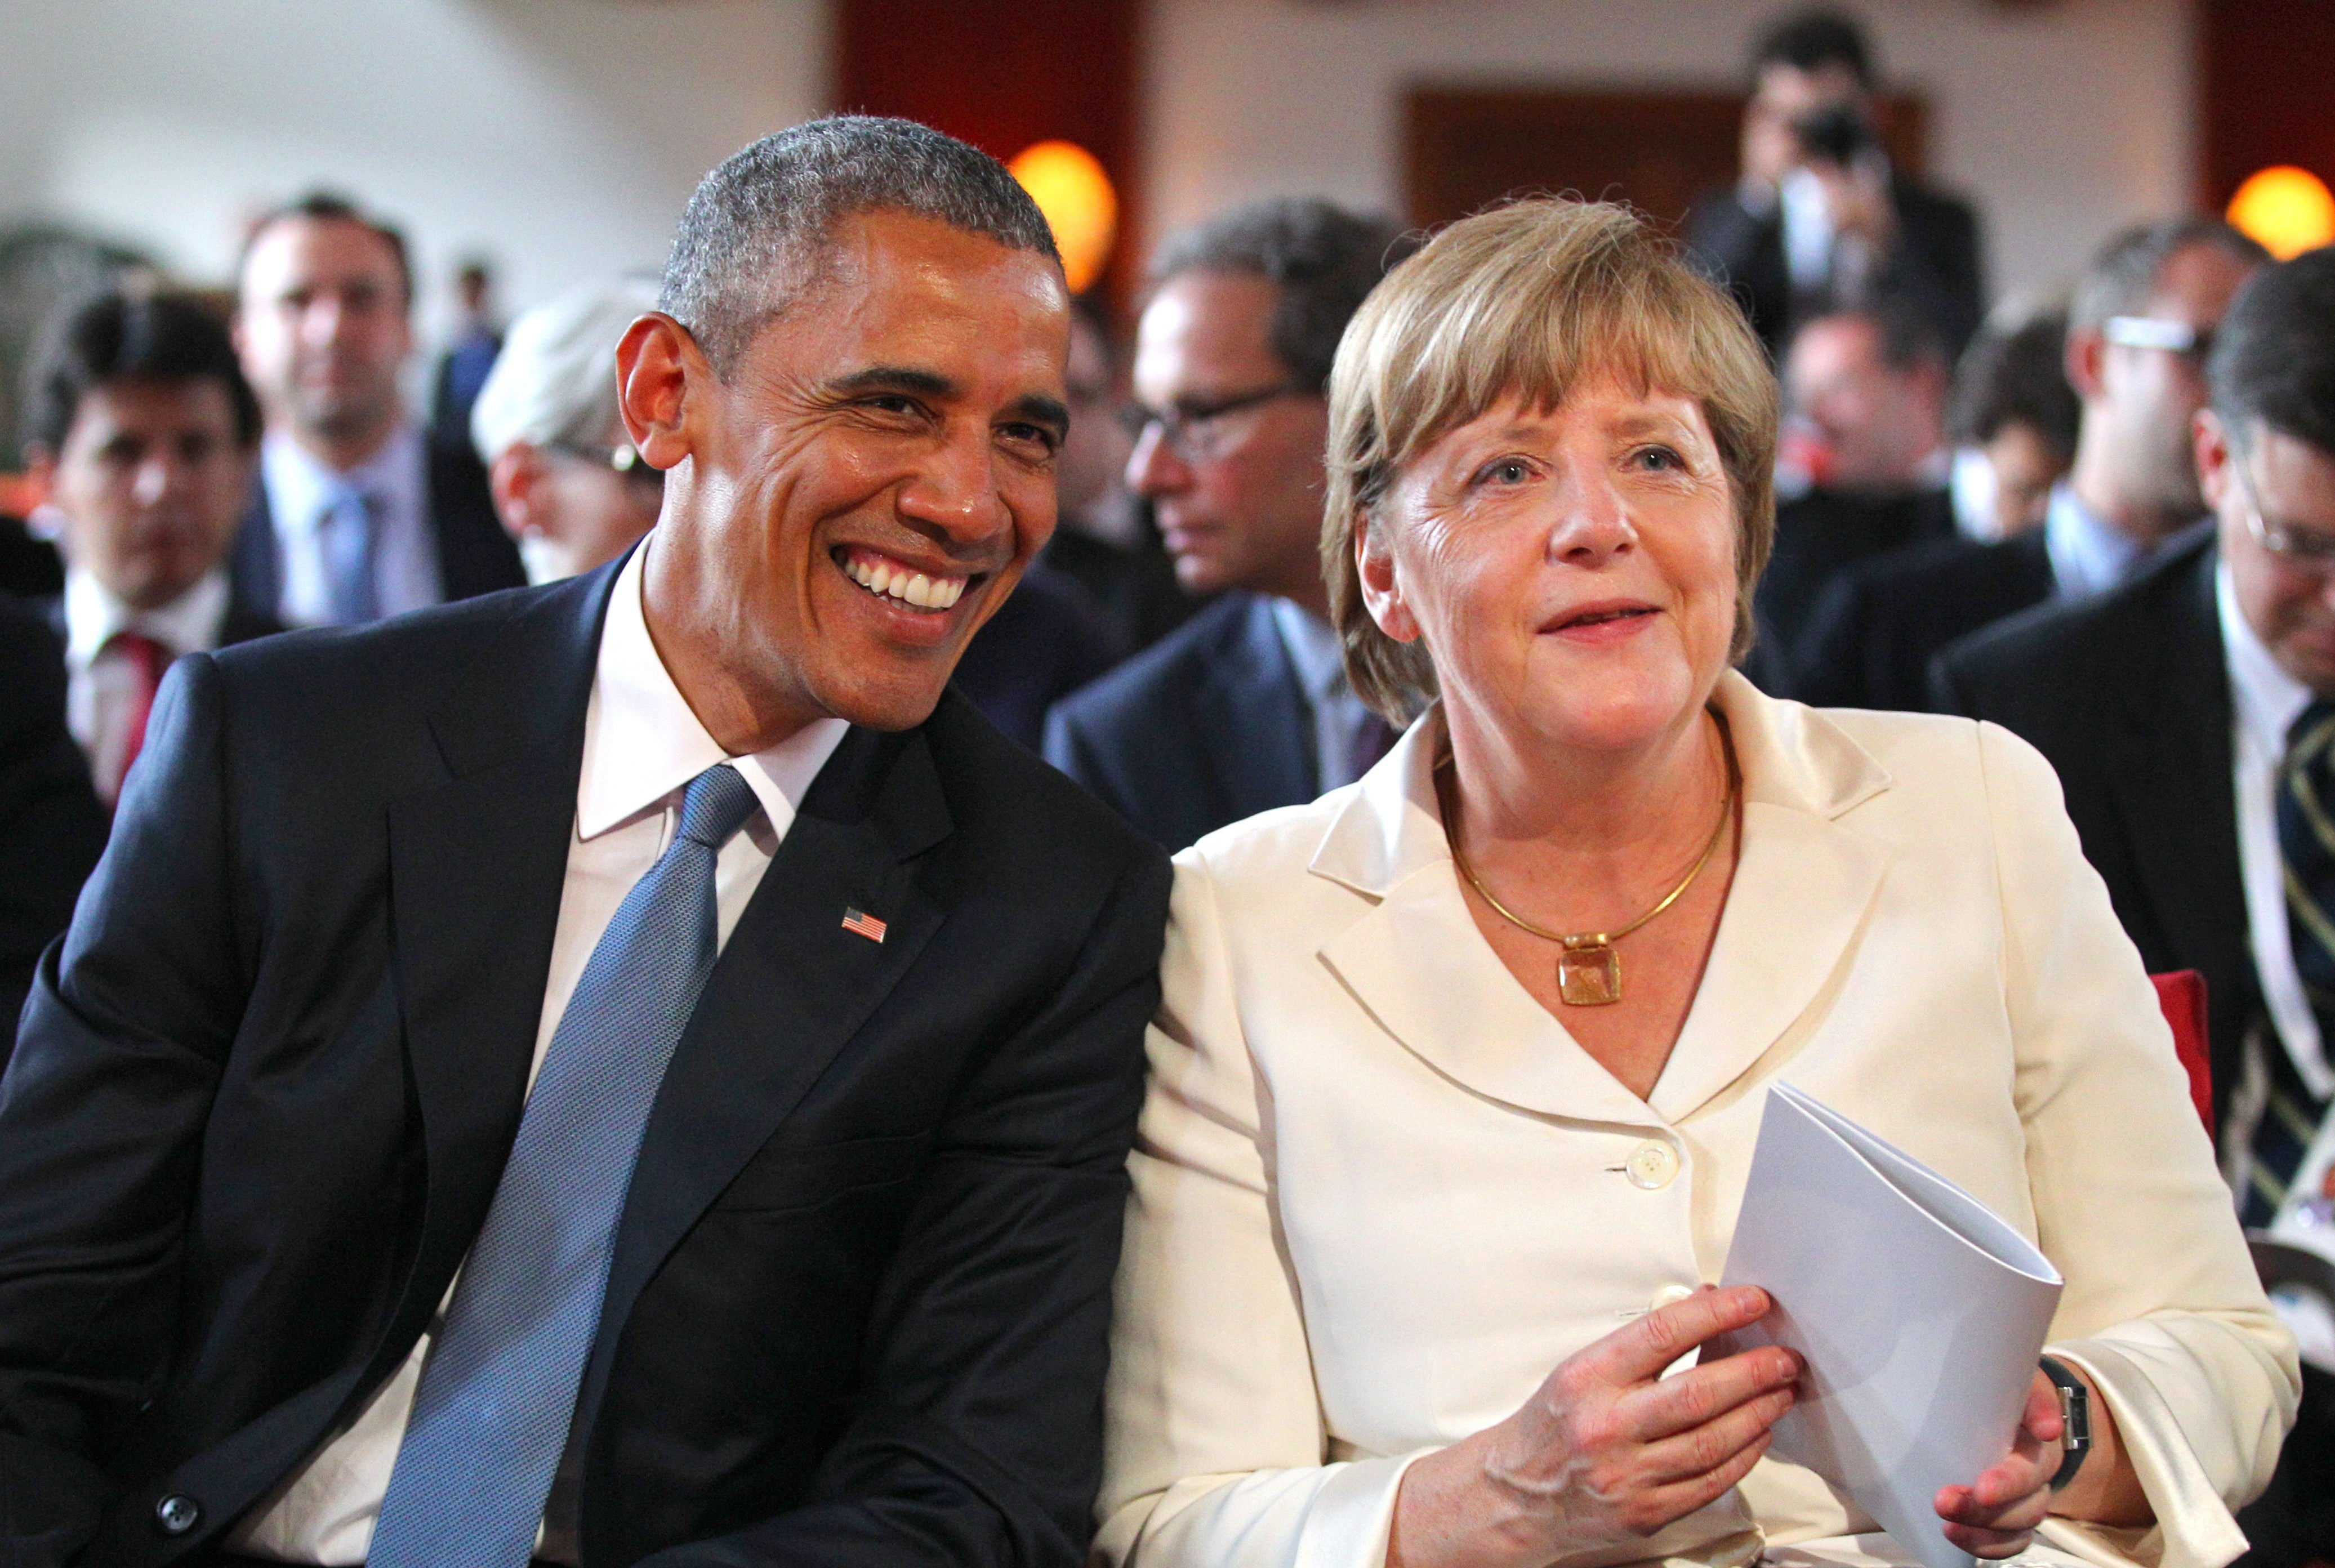 Barack Obama Will Give His First Post-White House Talk Alongside Angela Merkel
